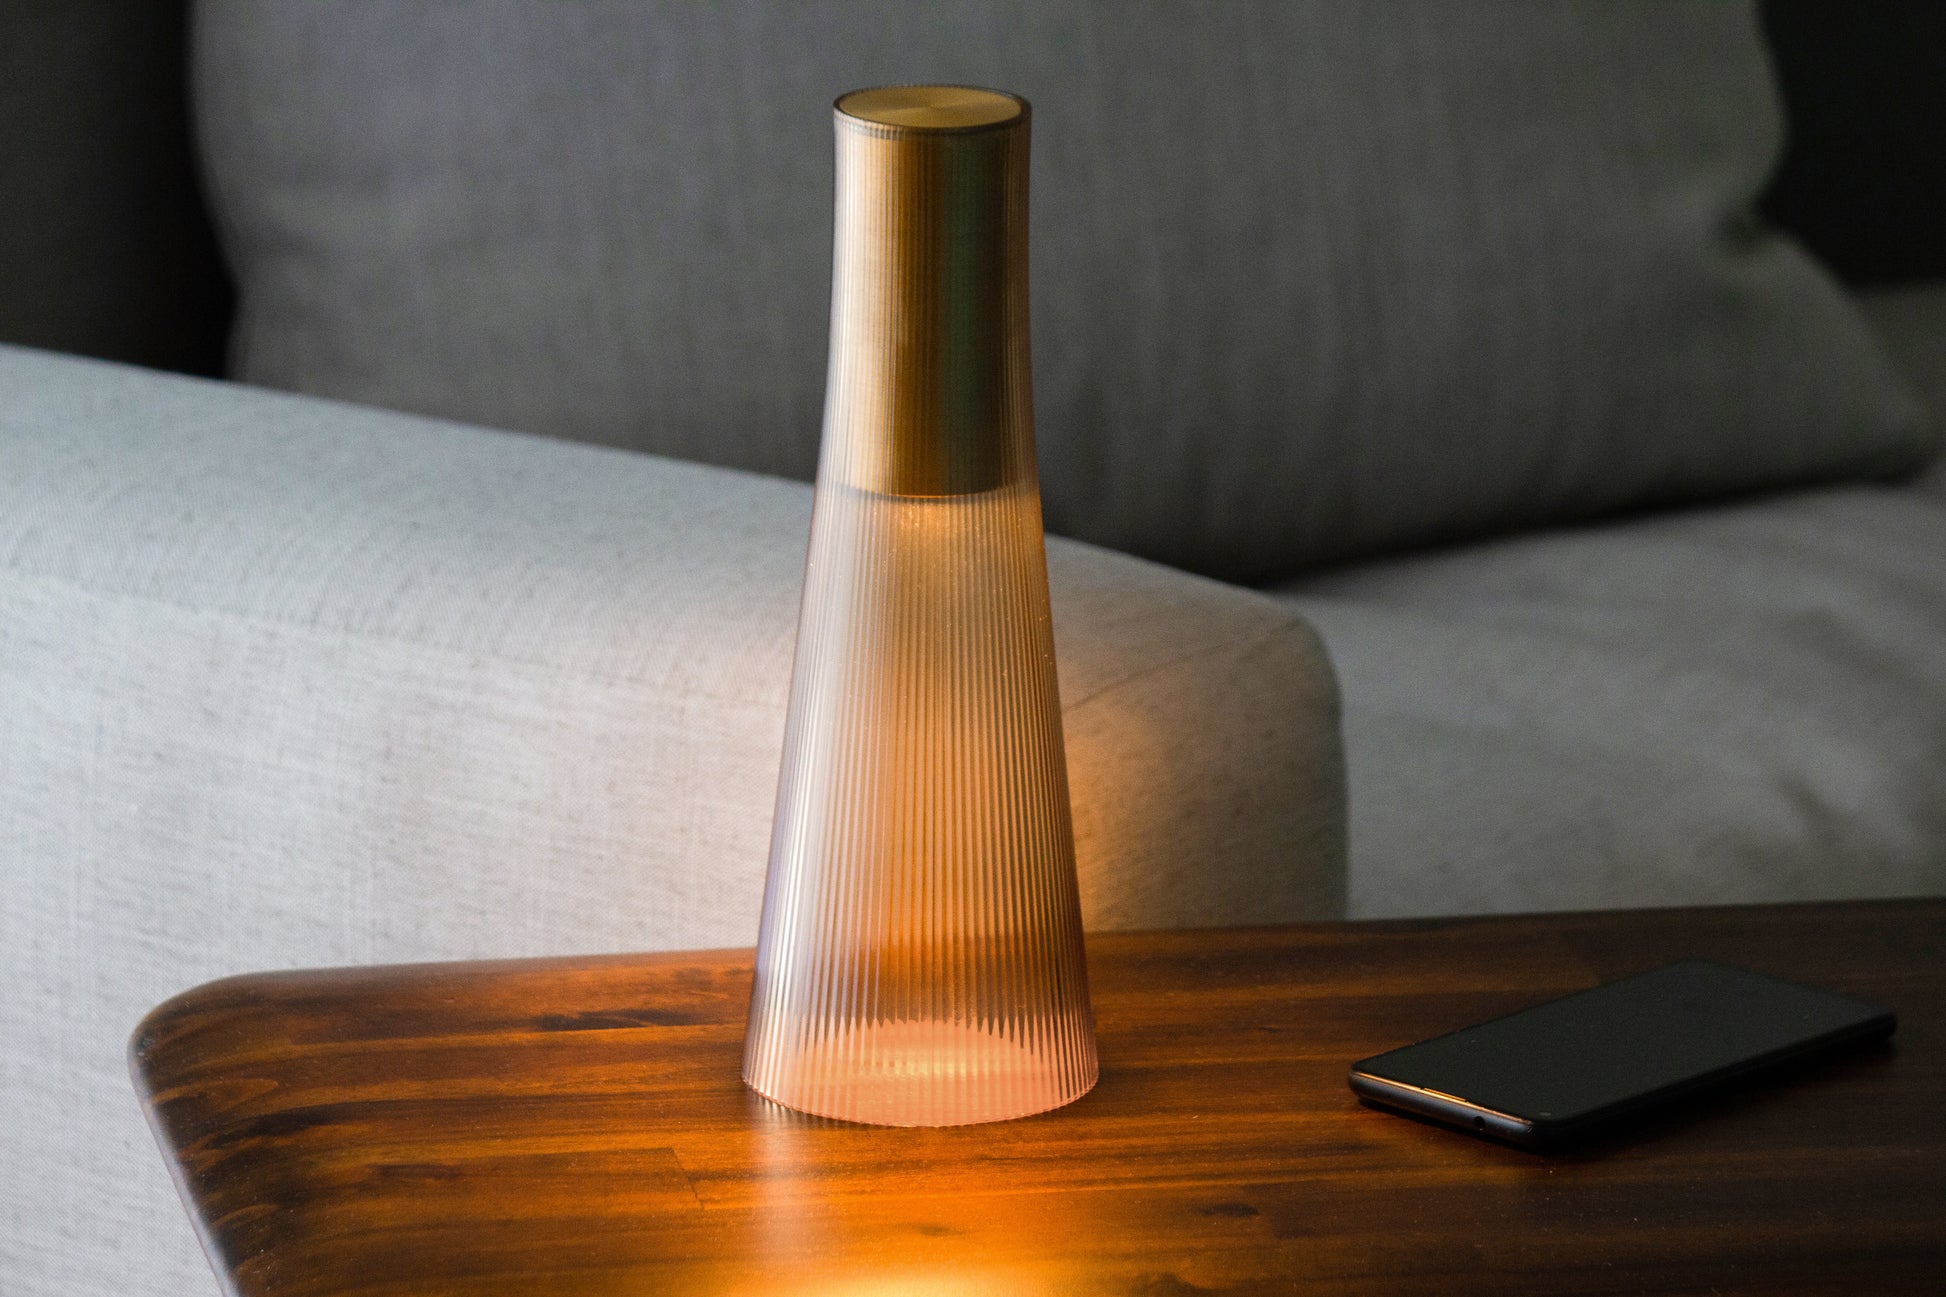 Pablo Design Candel Portable Lamp